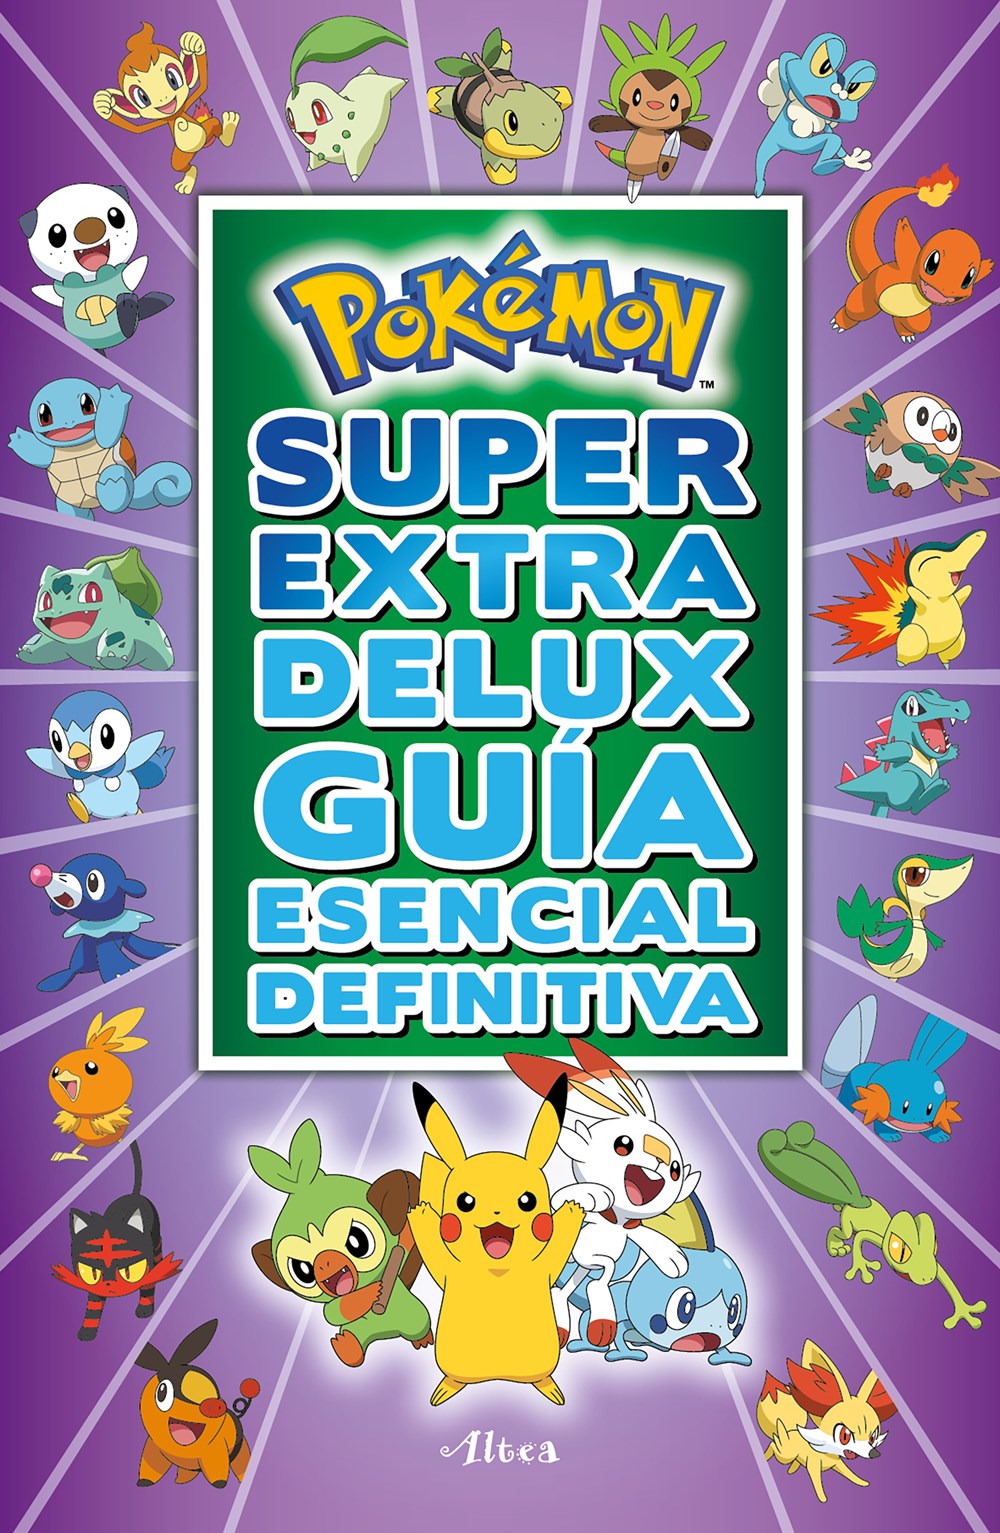 Pokémon súper extra delux guía esencial definitiva